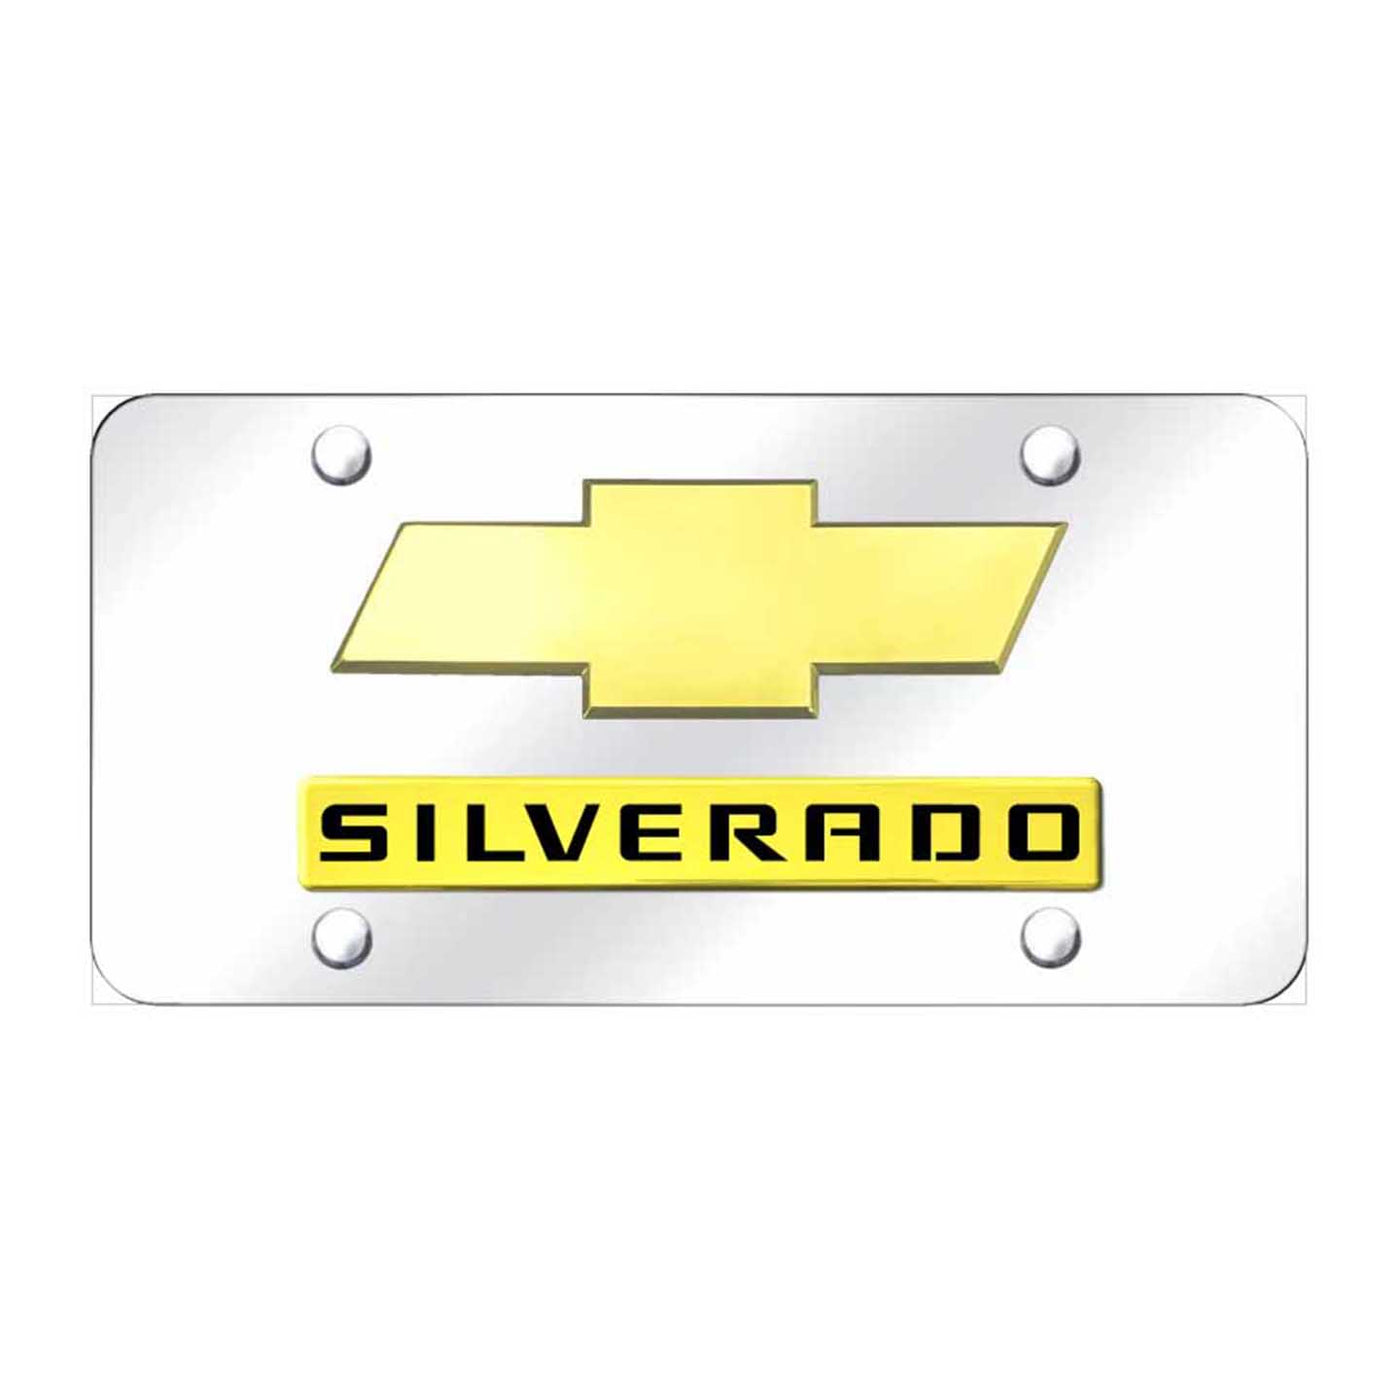 Dual Silverado (New) License Plate - Gold on Mirrored